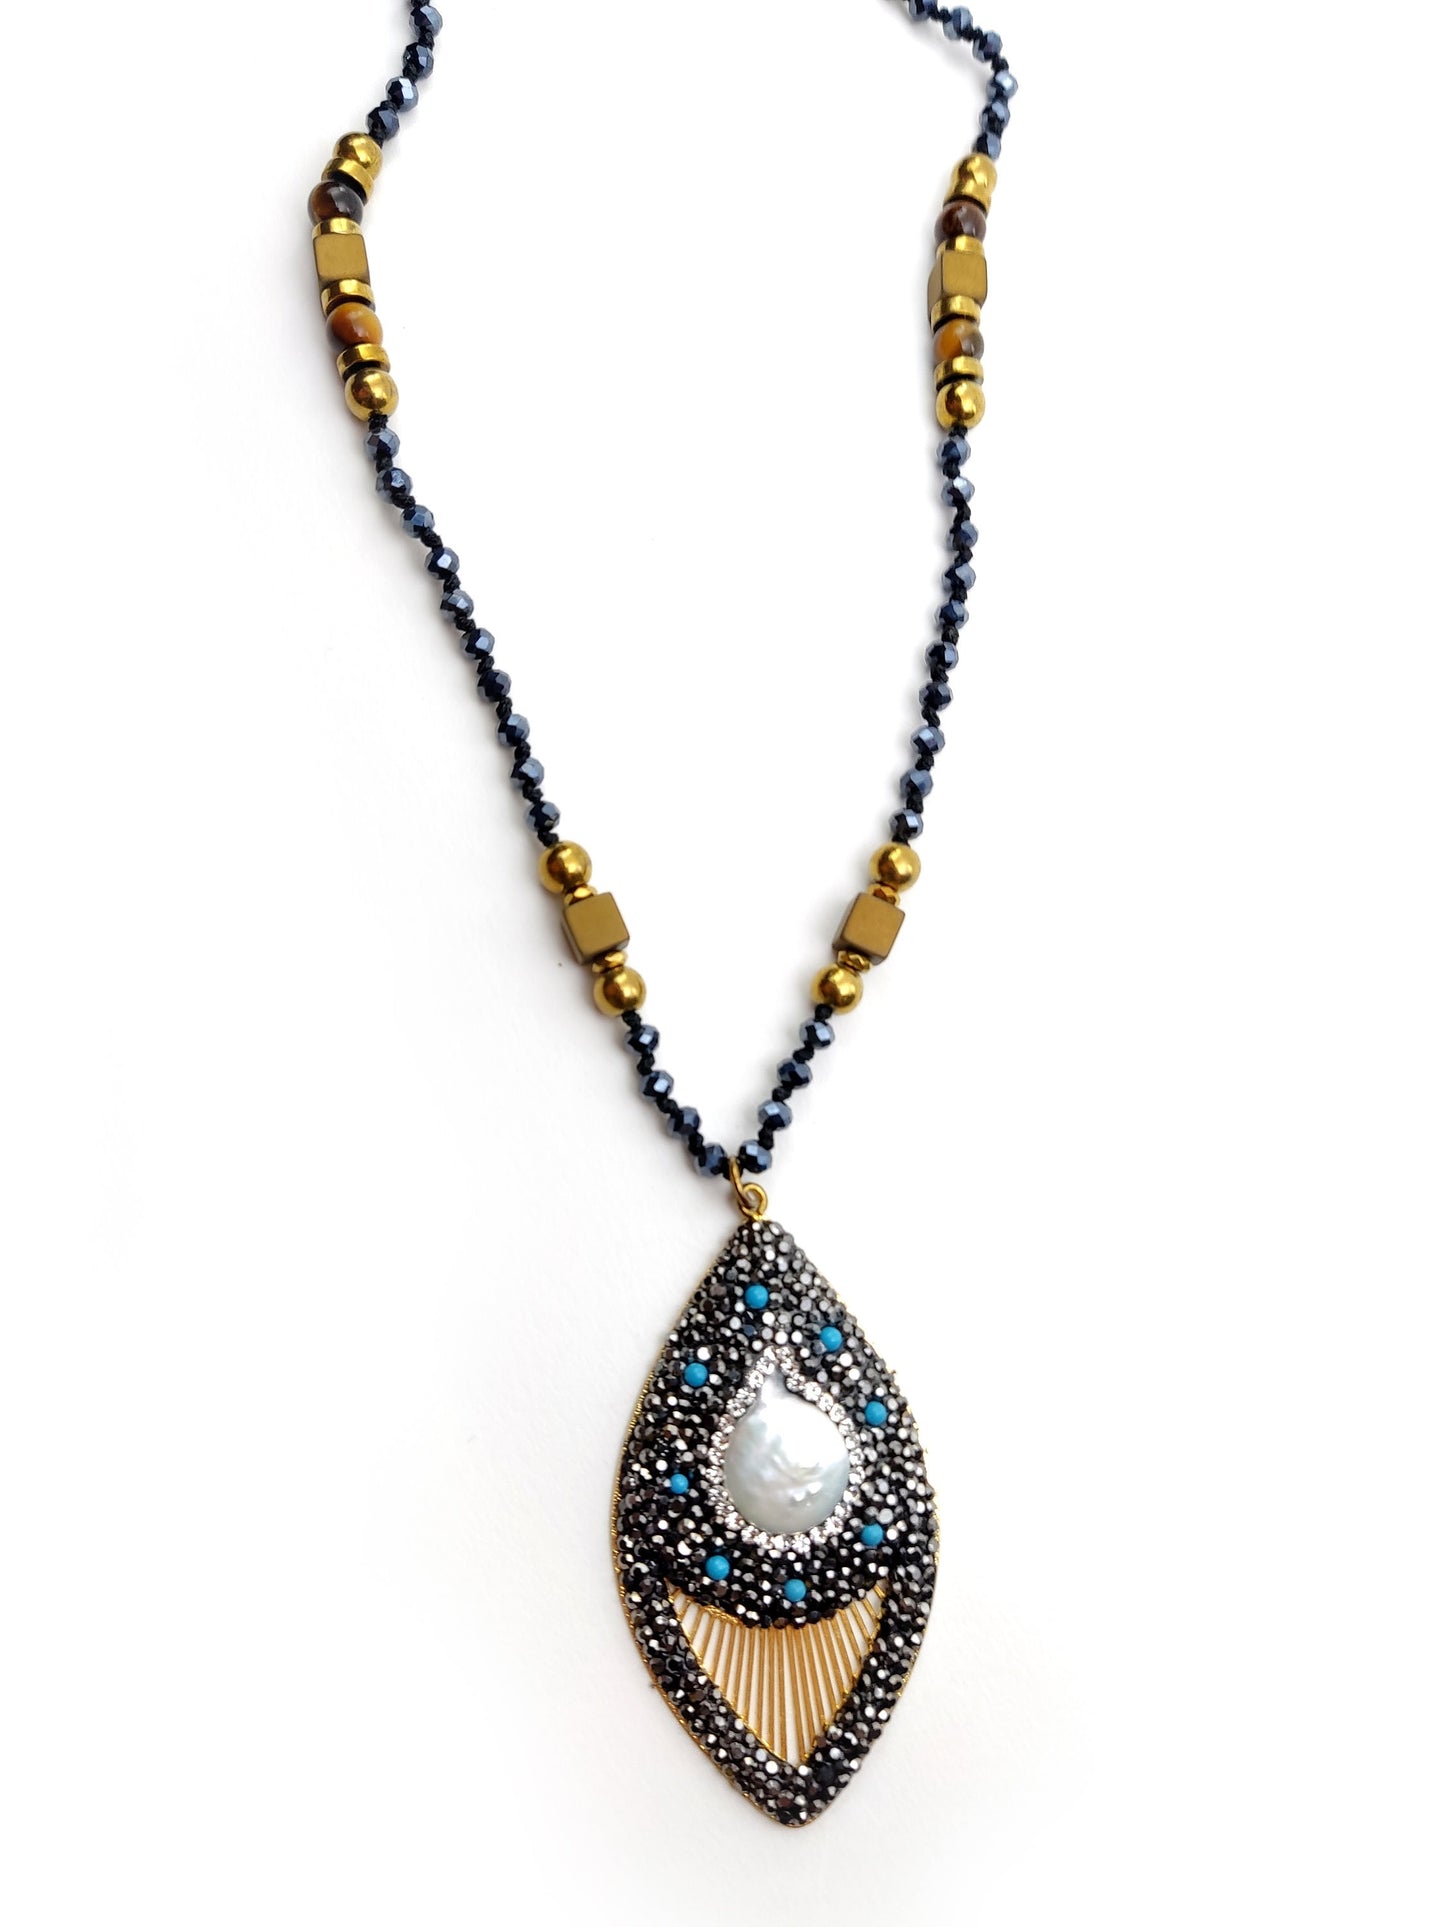 Handmade Long Semi Precious Stones Necklace, Drop Pendant With Marcasite - Mother Of Pearl, 70cm, Griechische Halskette Schmuck, Jewelry